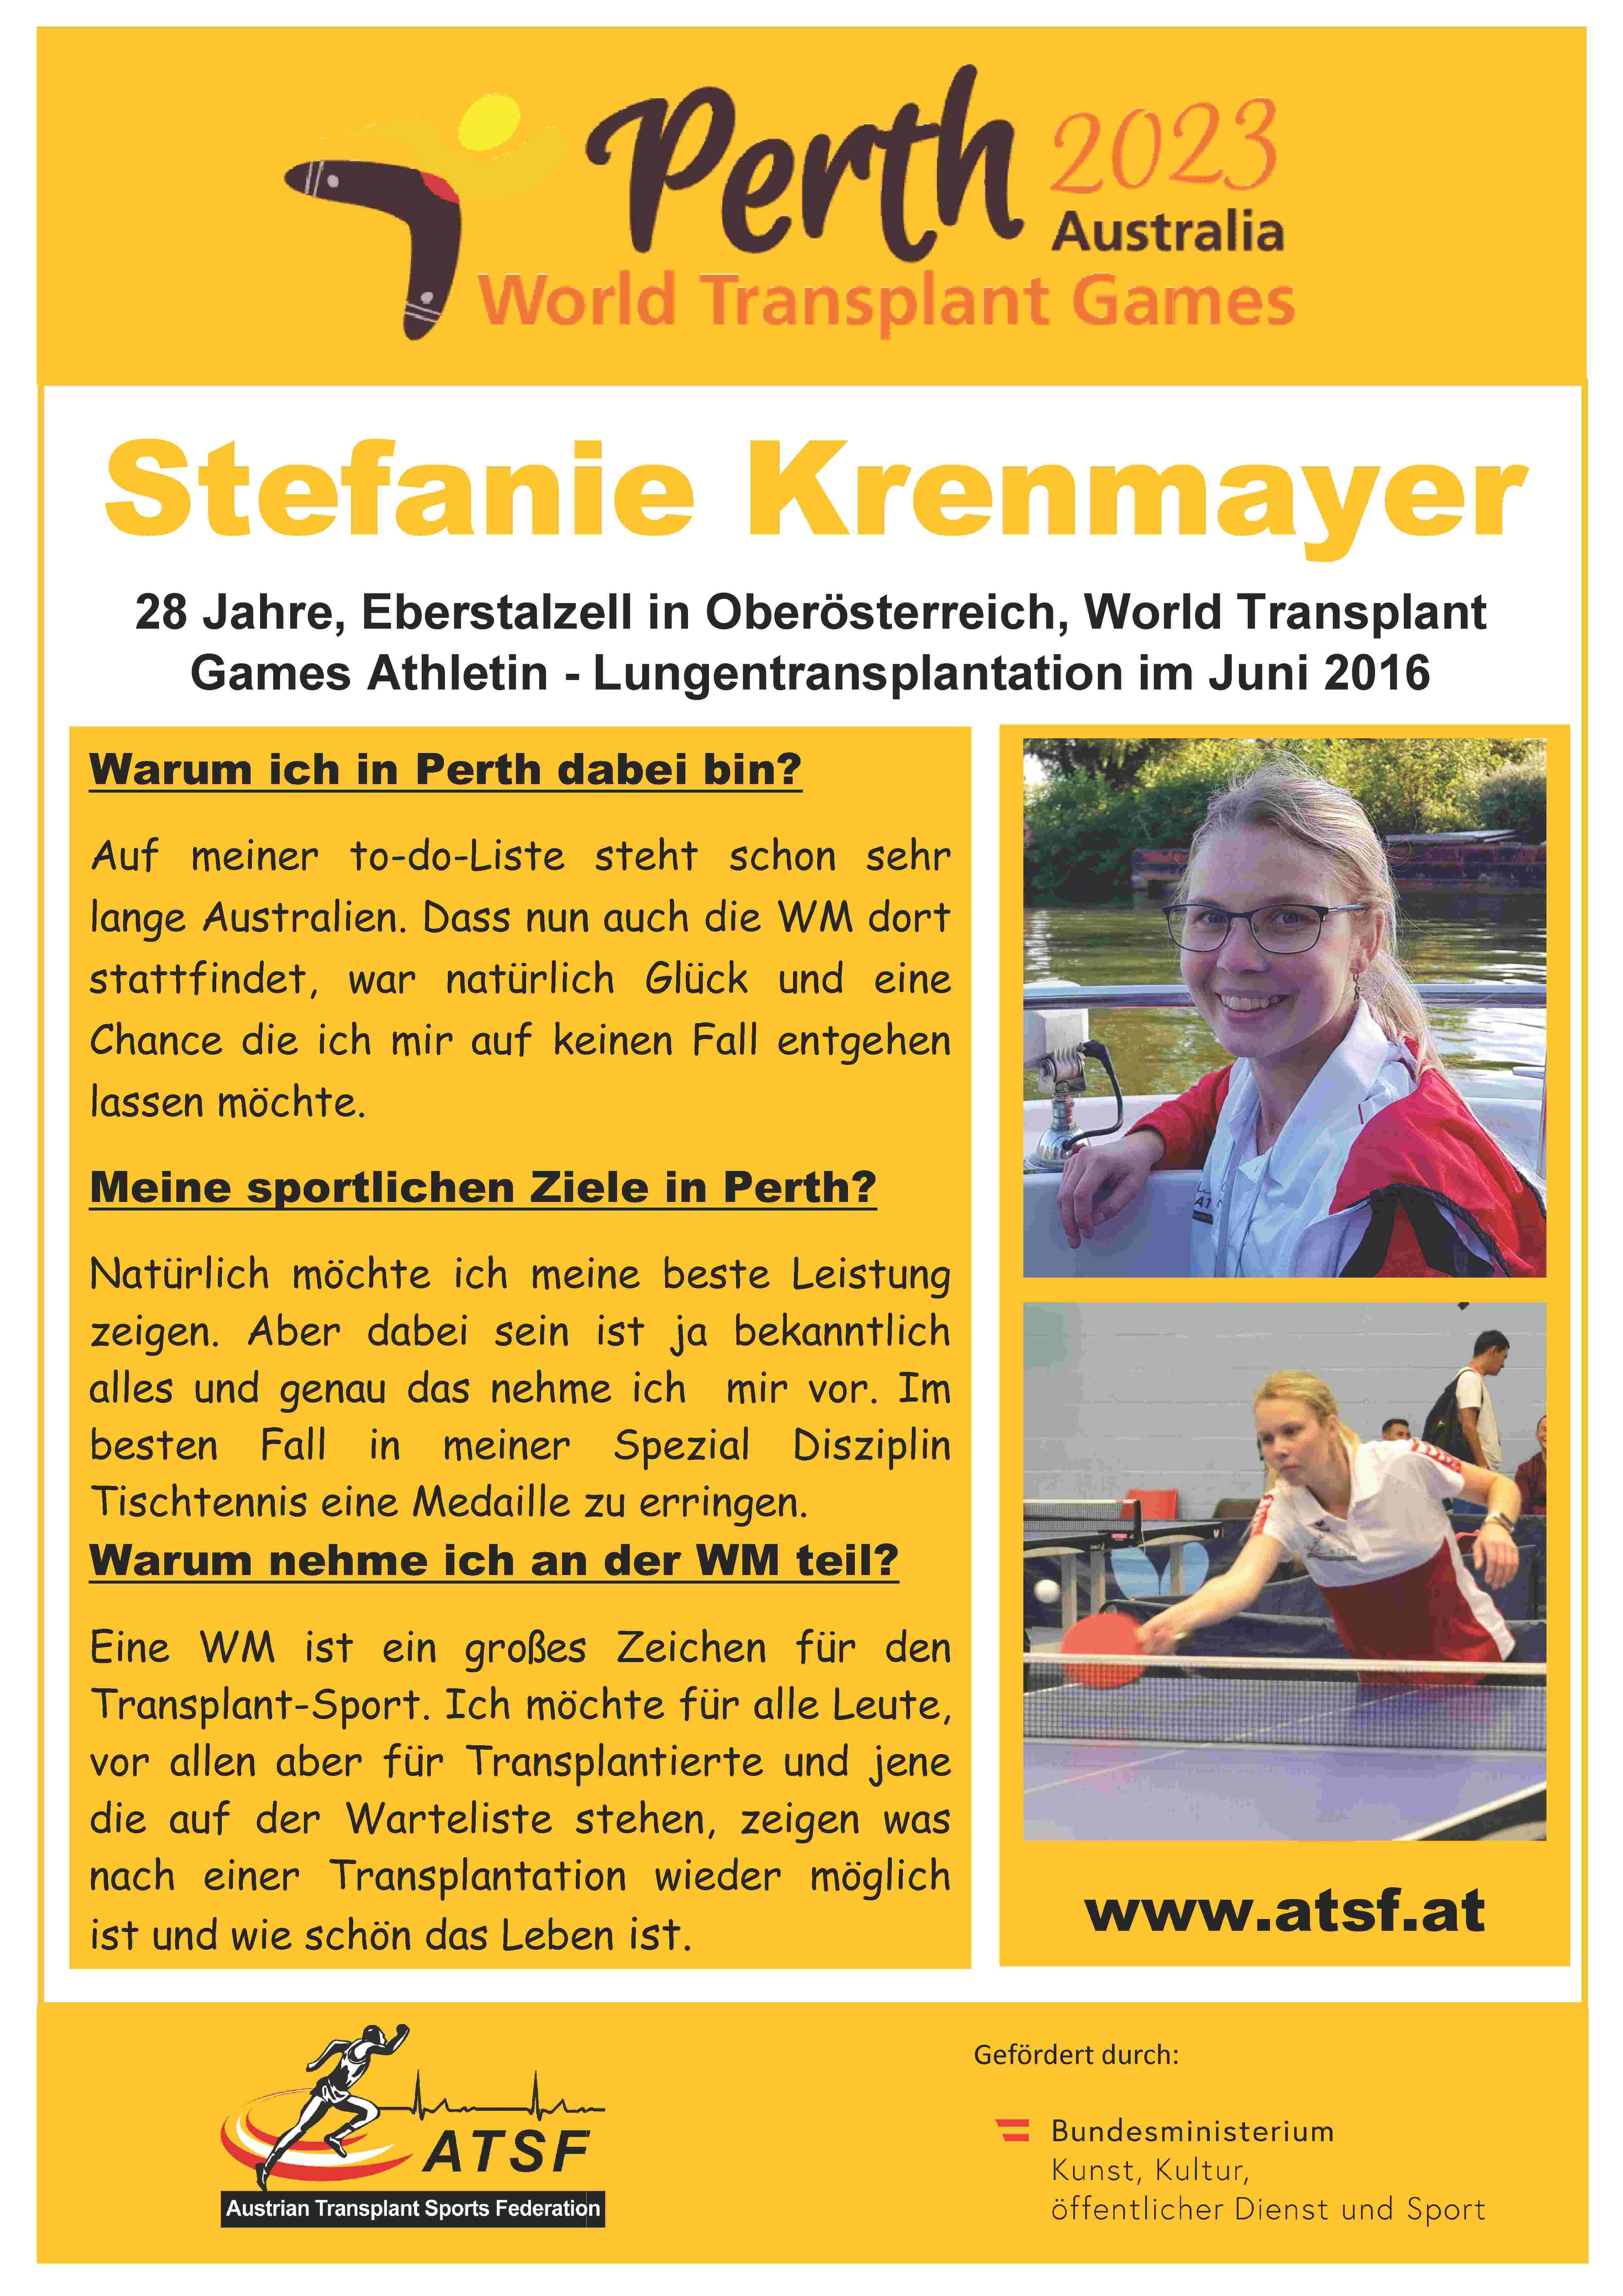 Stefanie Krenmayer